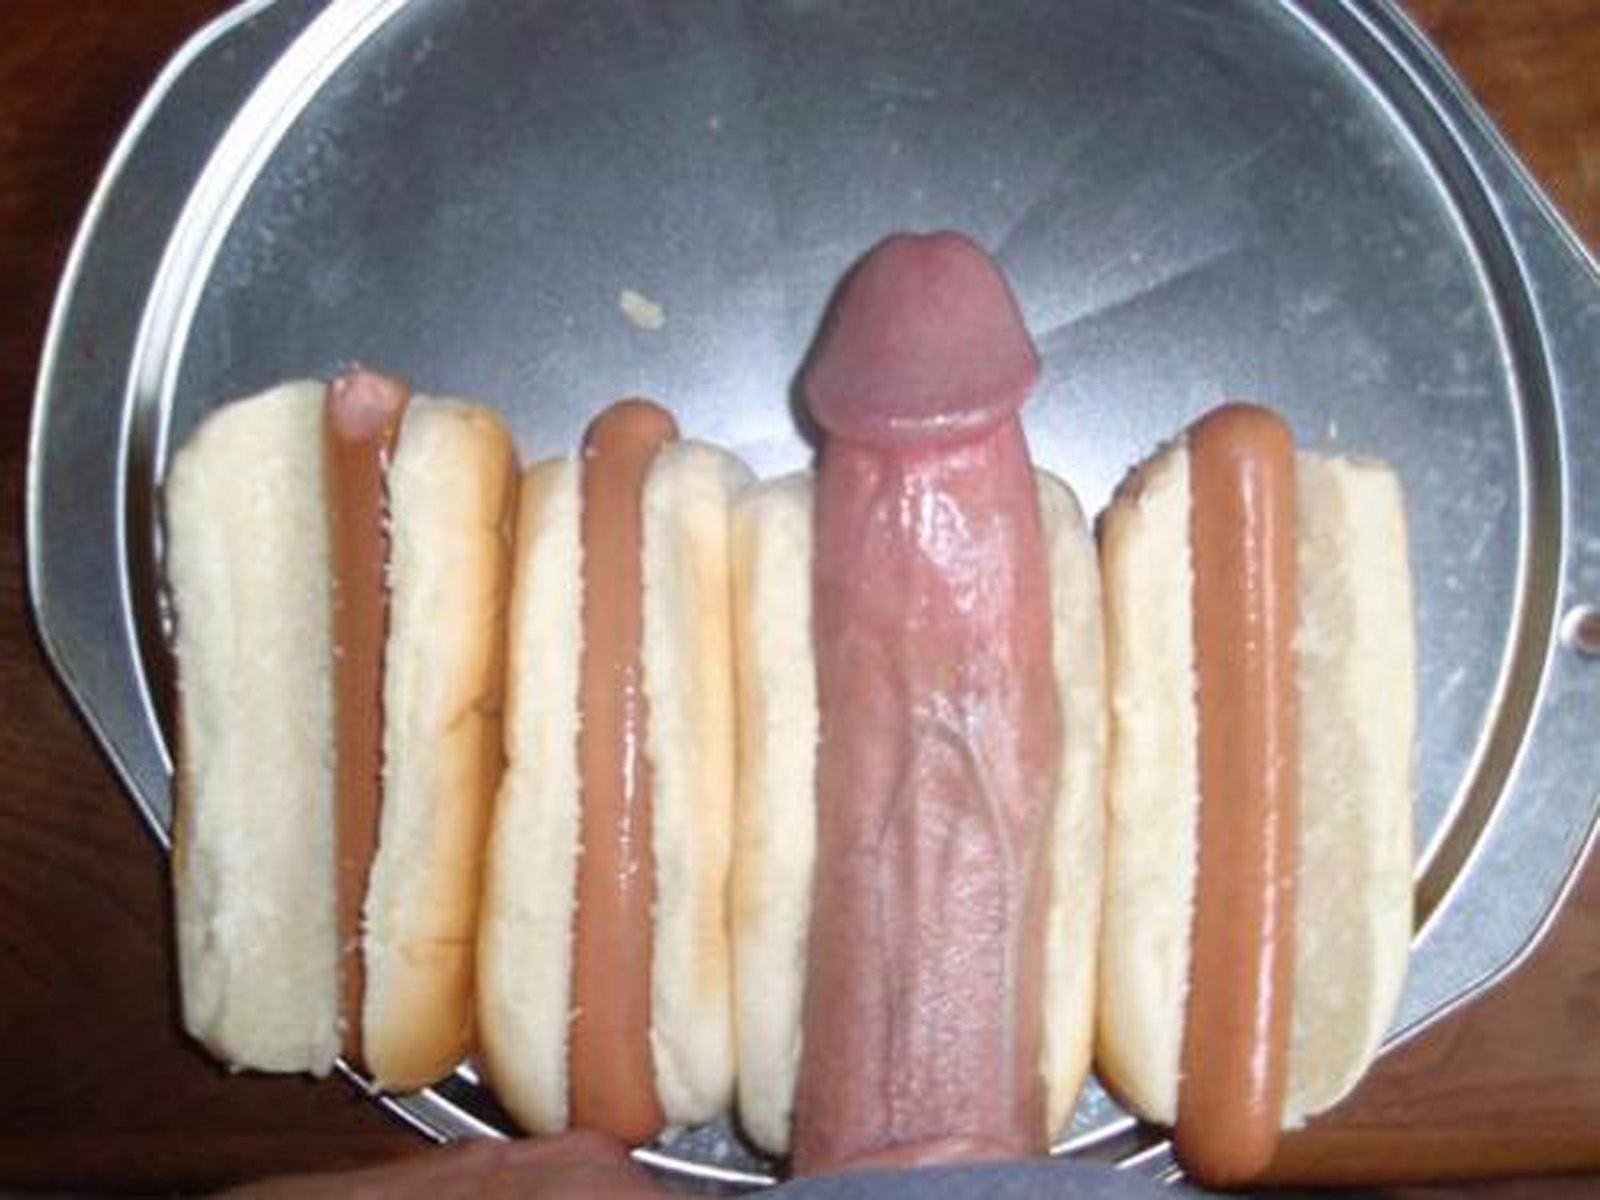 Hot dog my dick